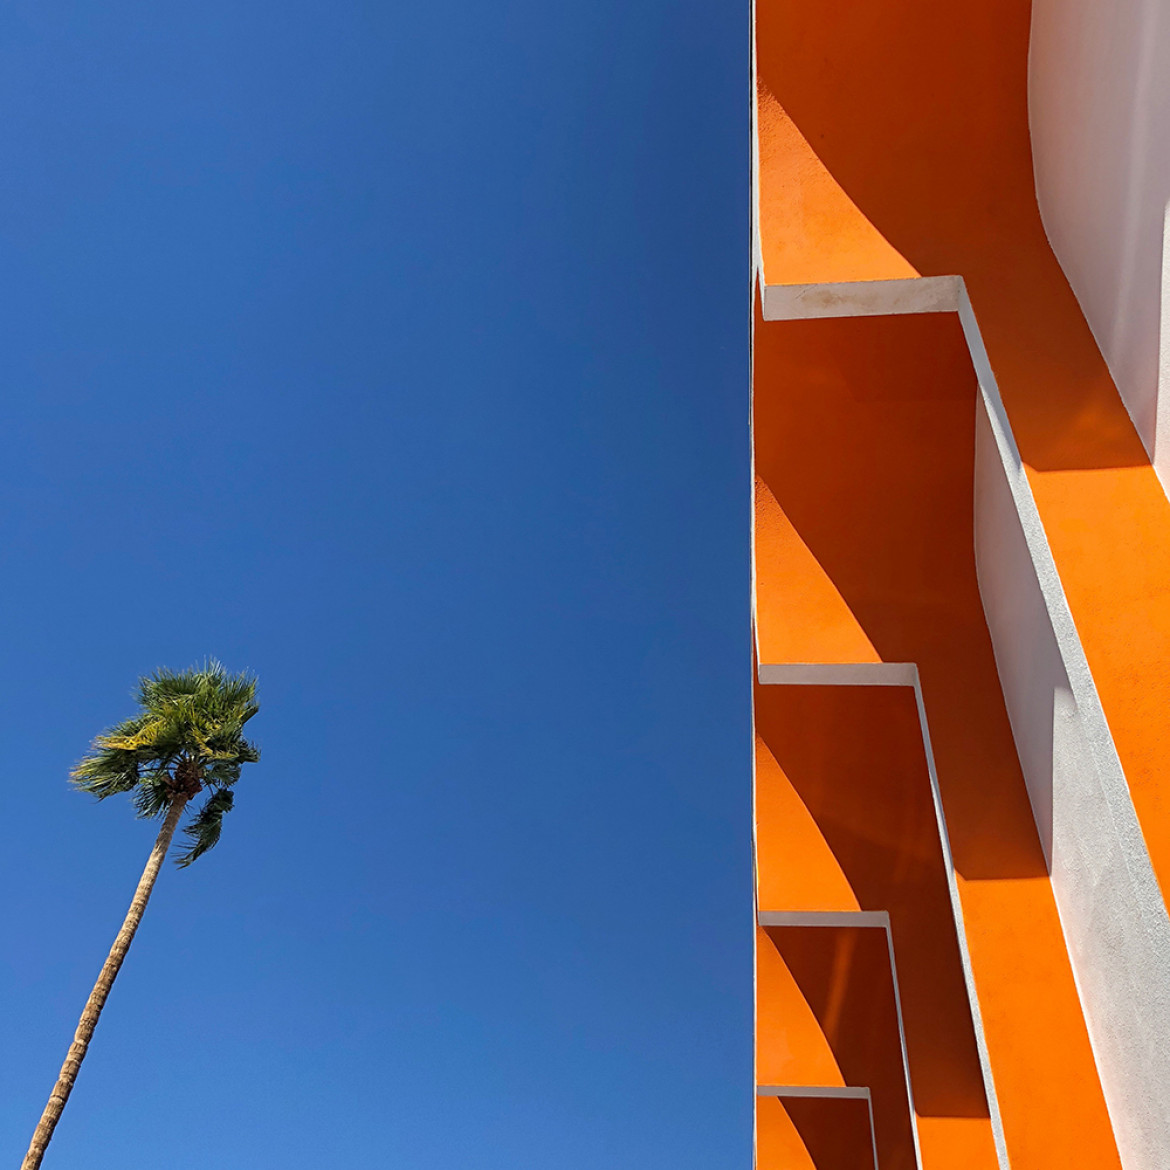 fot. Sally Ann Field, "Palm Springs Palm", 2. miejsce w kategorii Architecture / IPPA 2019